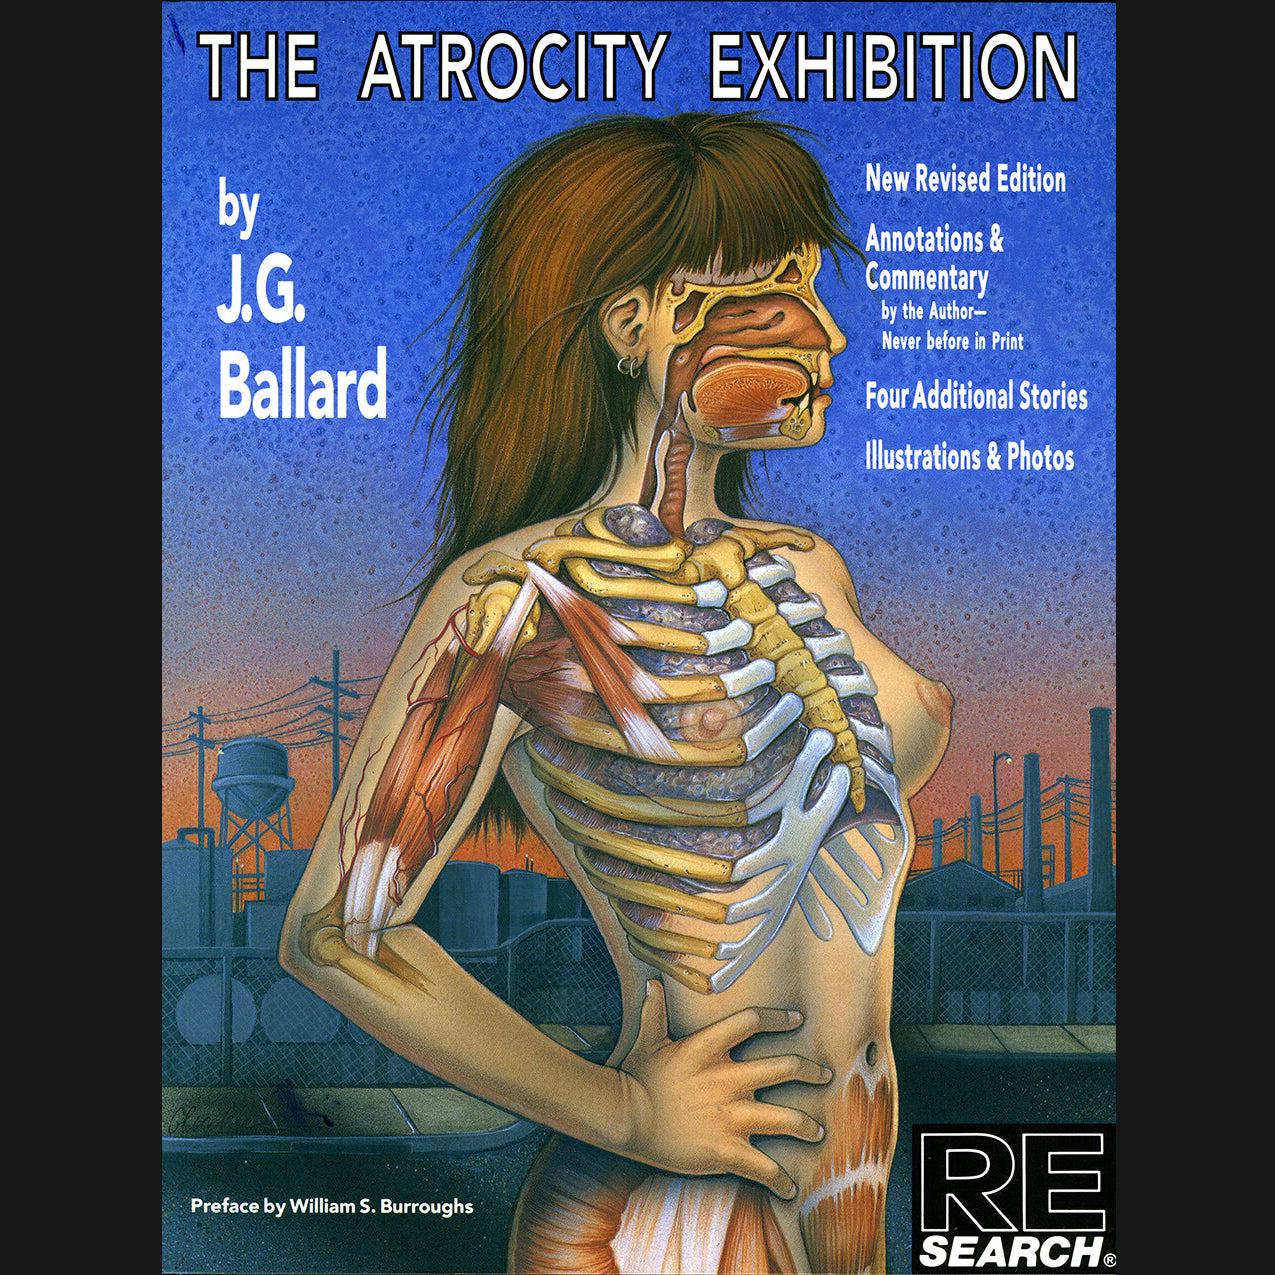 J.G. BALLARD - "THE ATROCITY EXHIBITION" BOOK